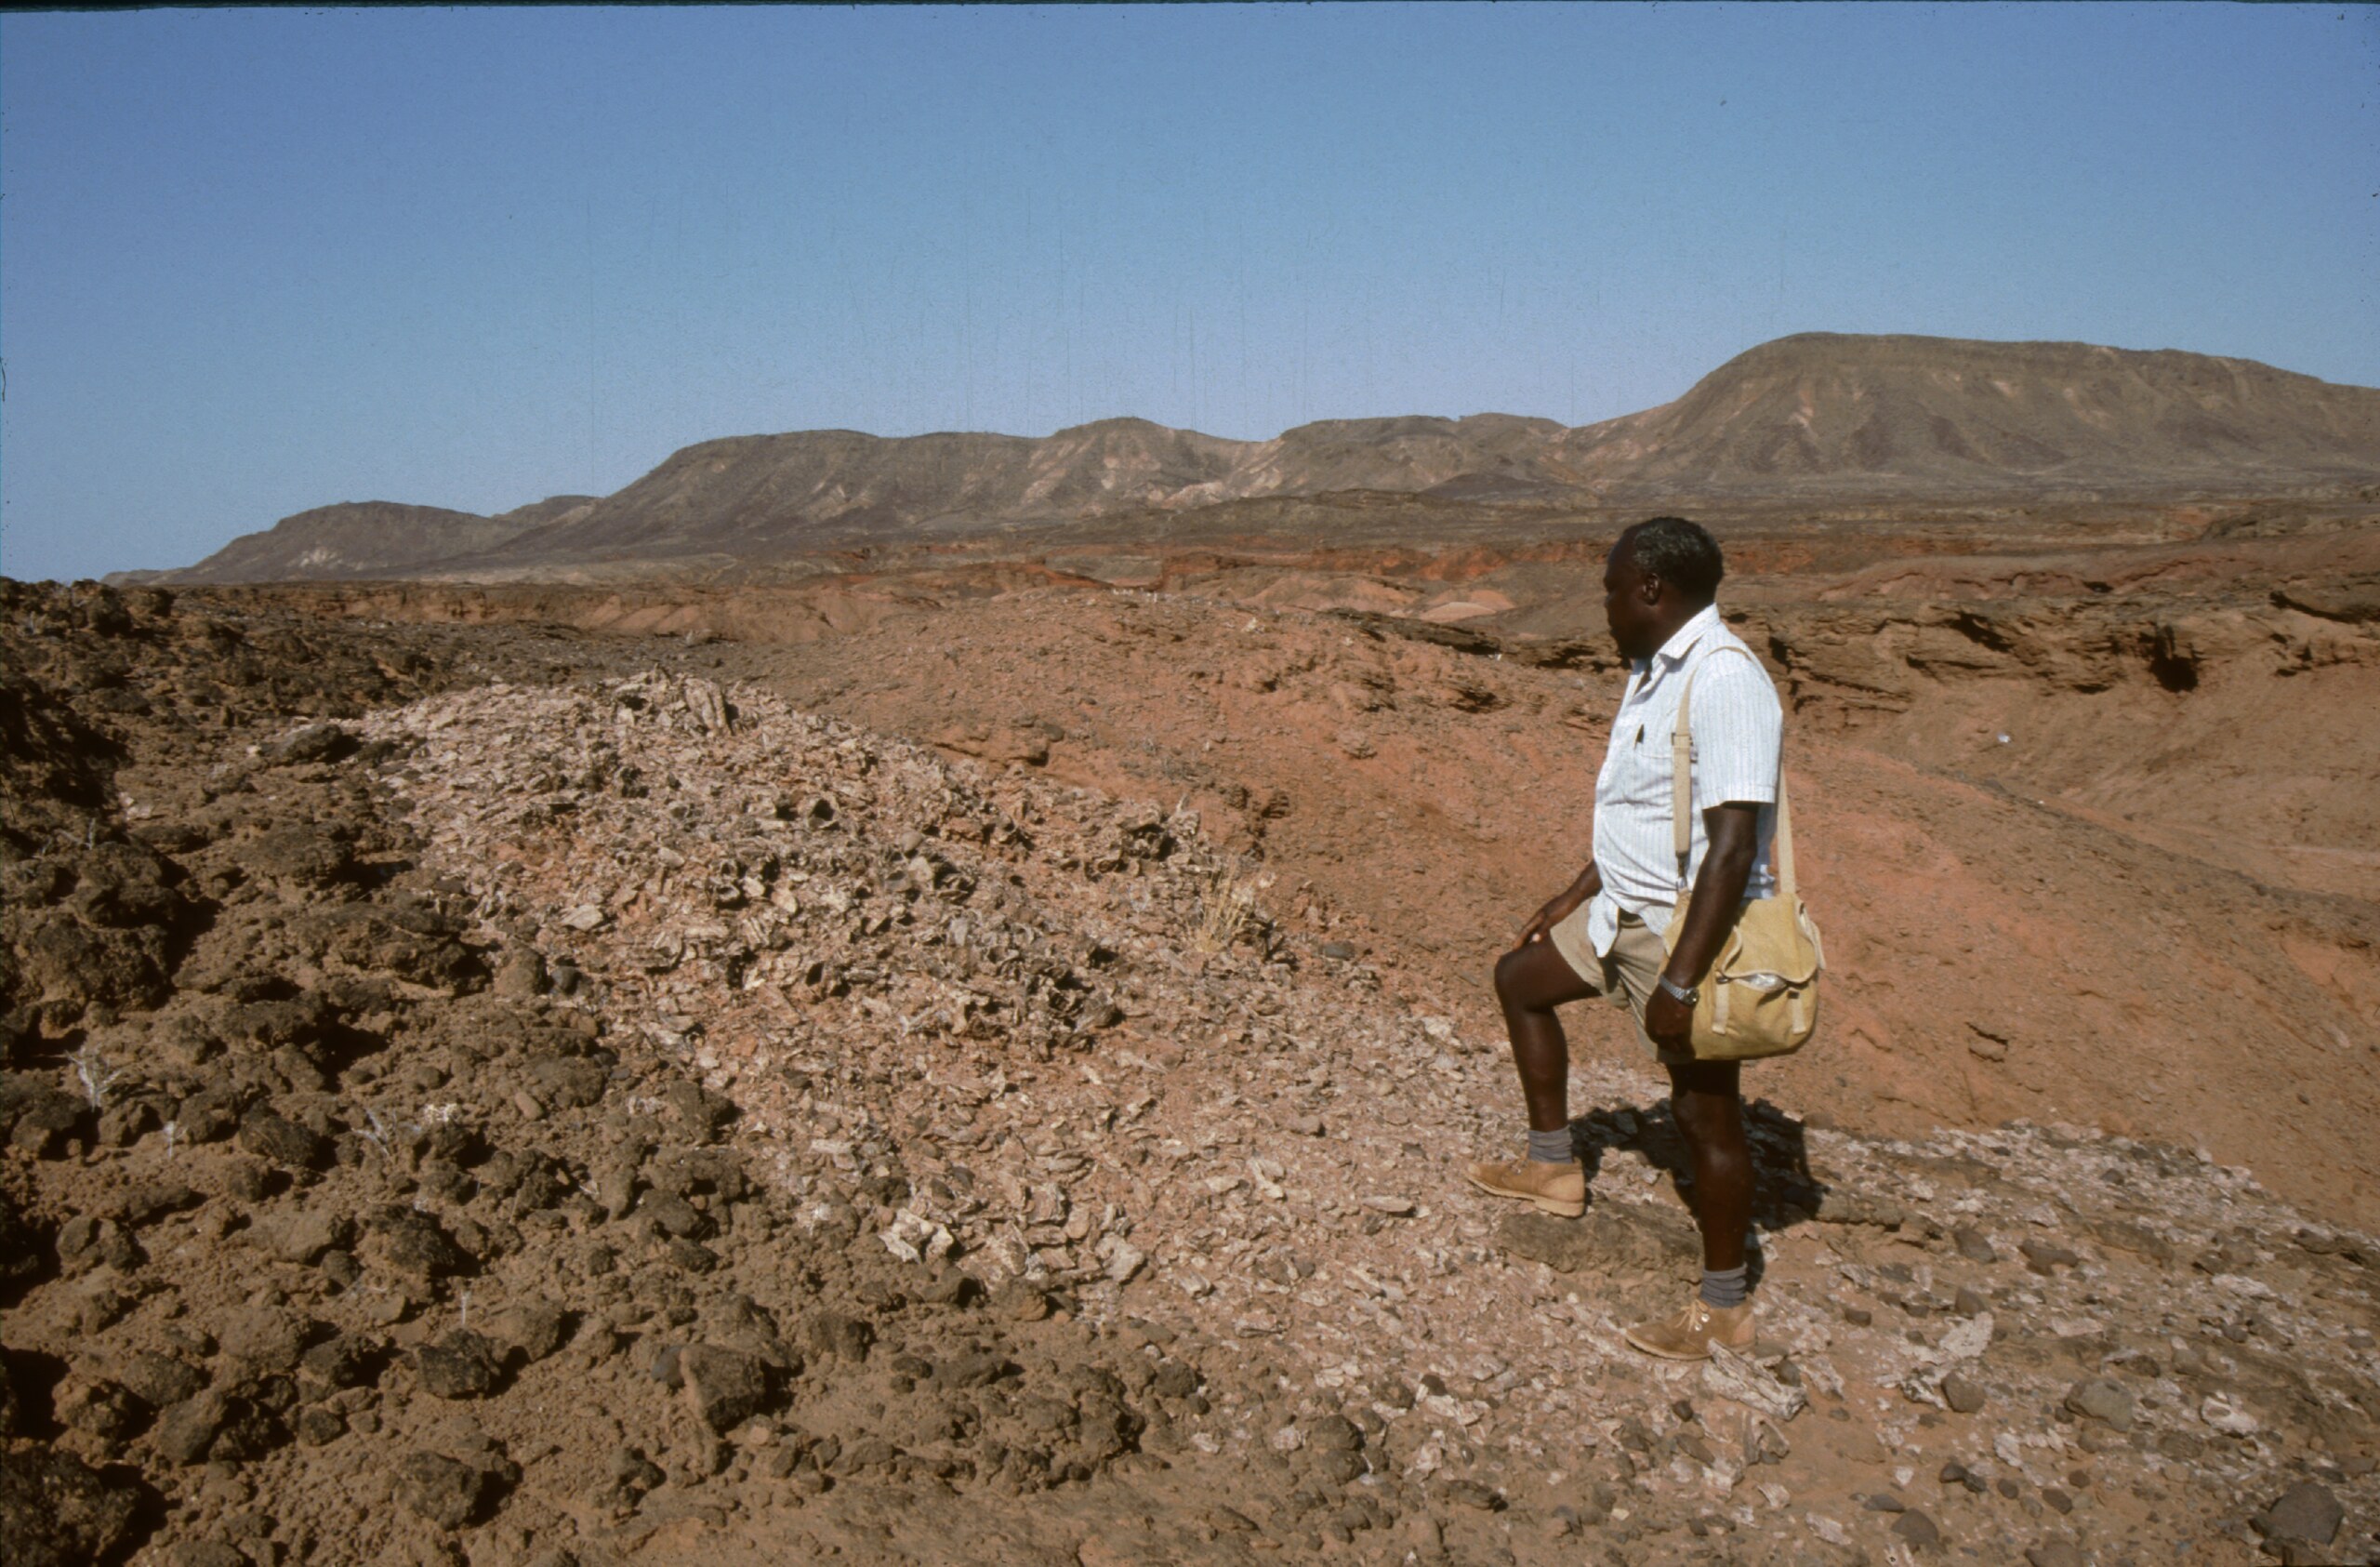 Kamoya Kimeu, legendary Paleontologist, passes away.